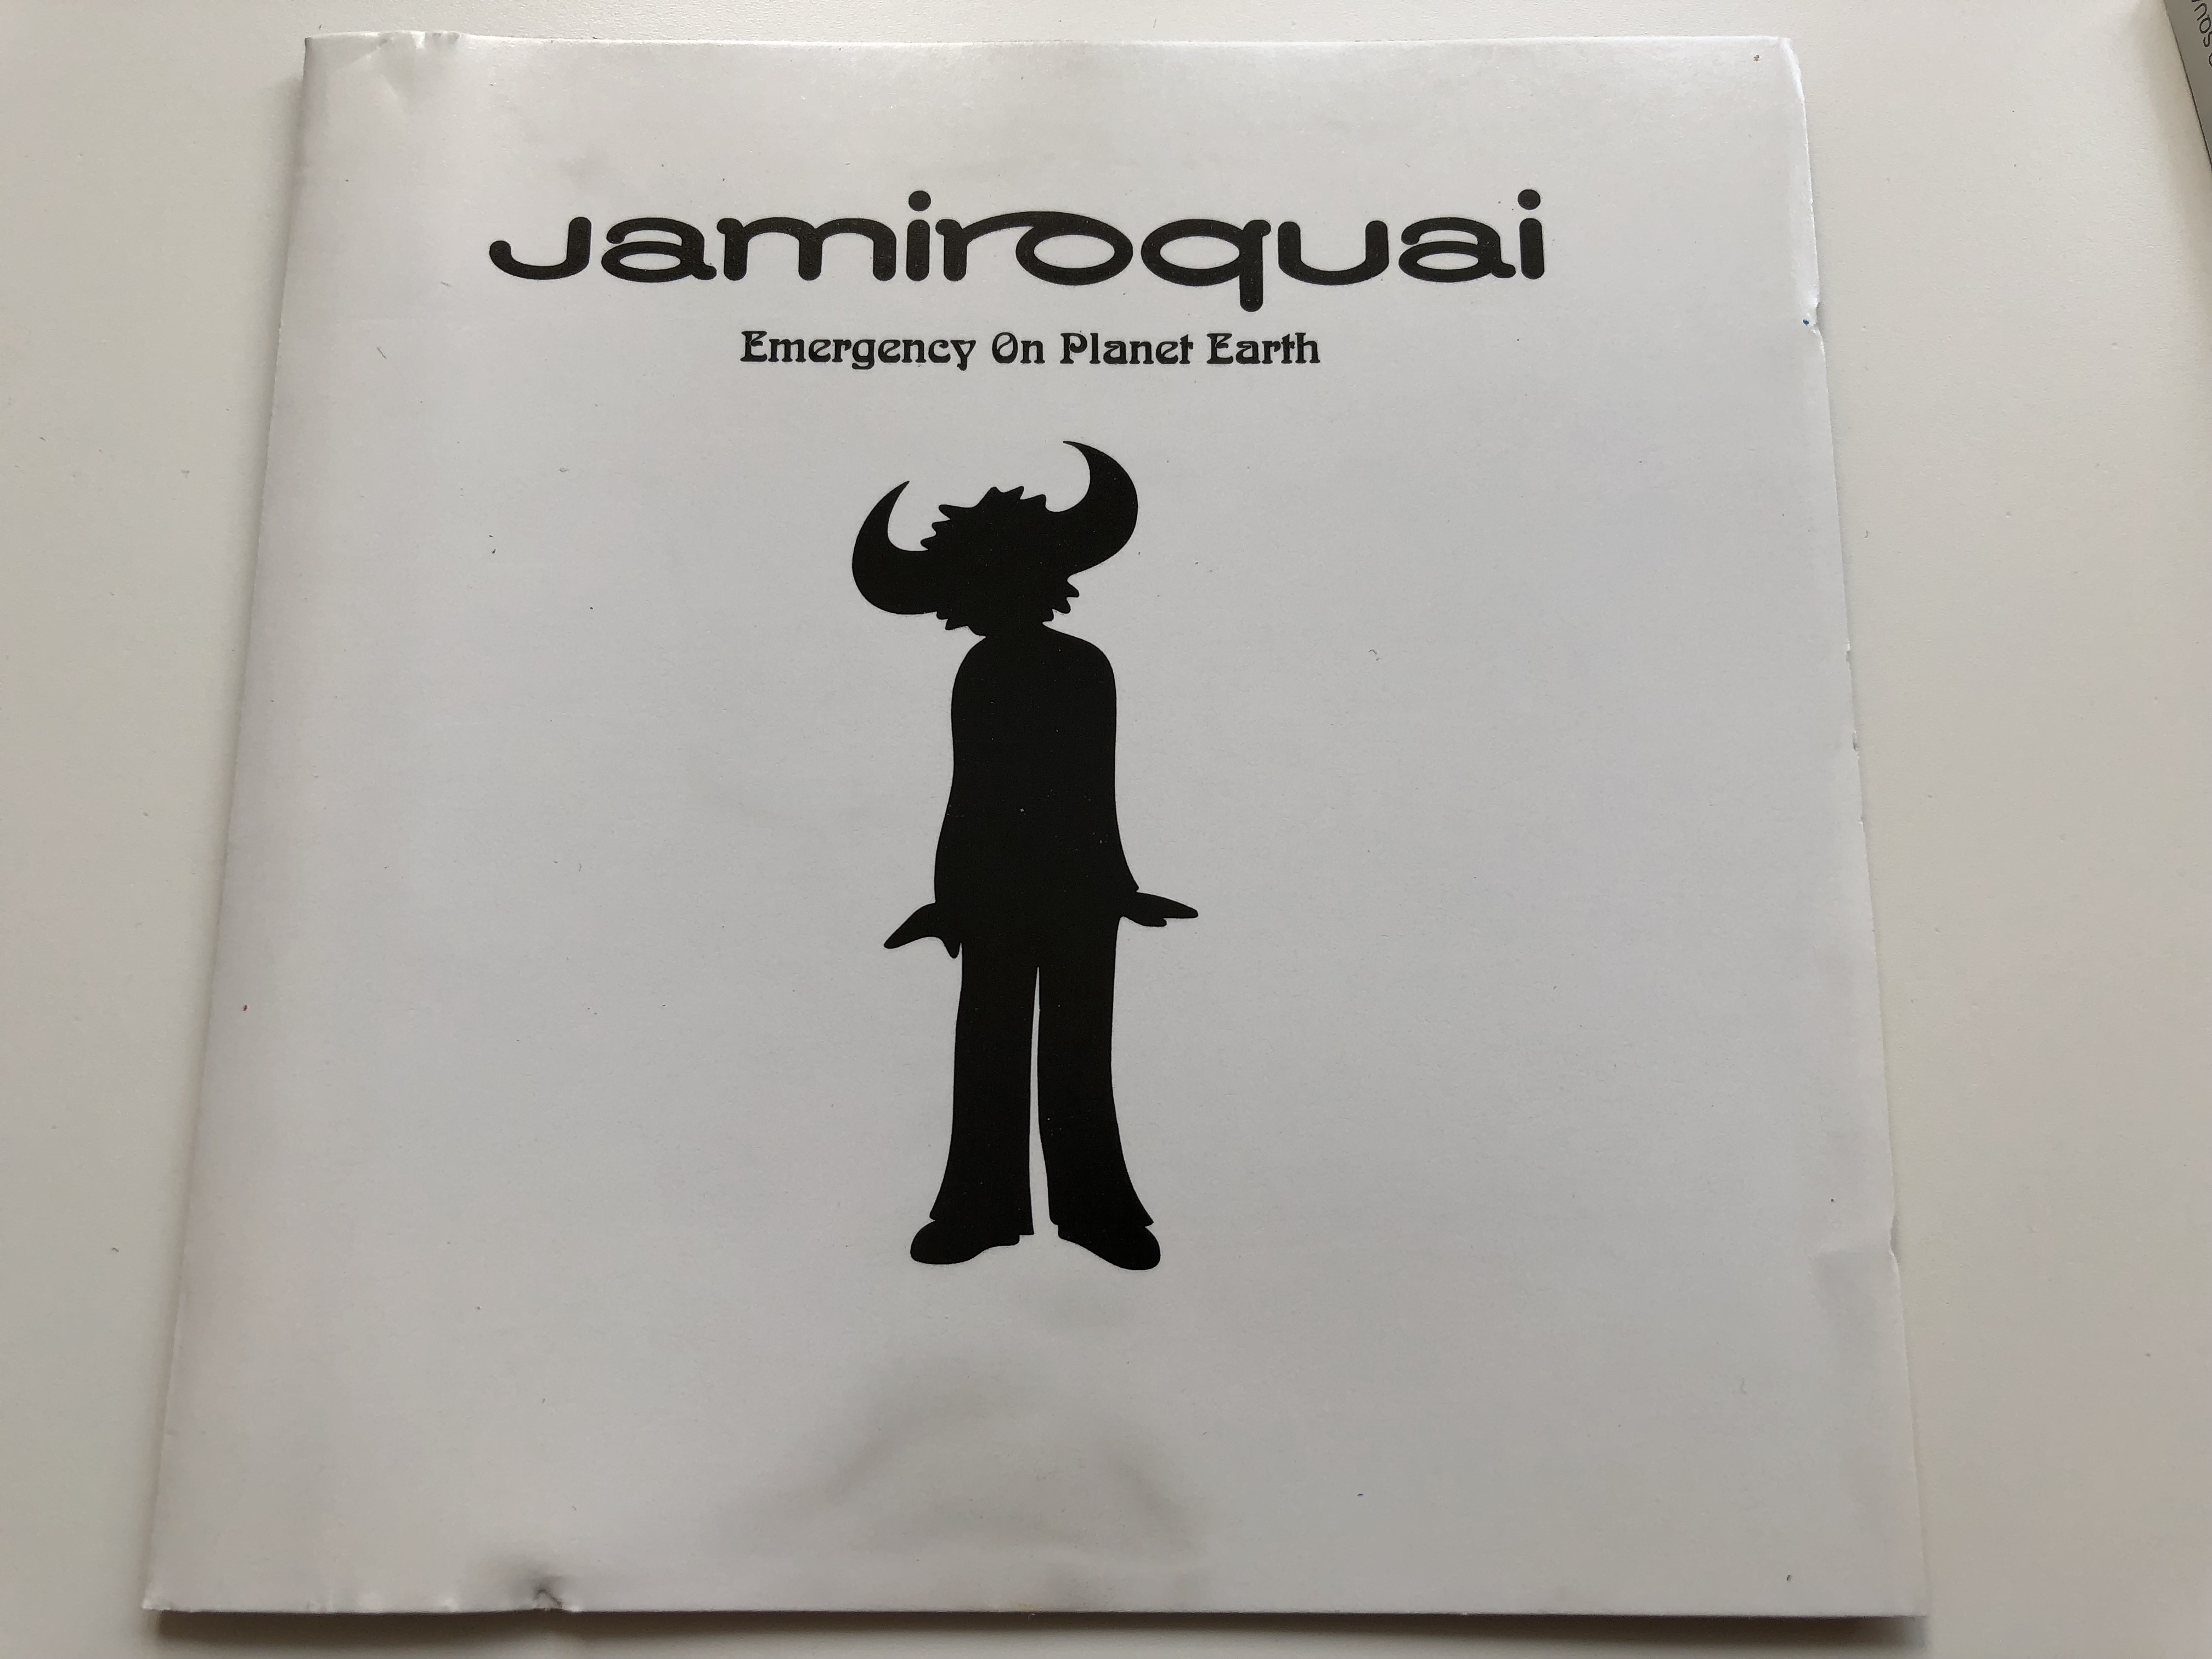 jamiroquai-emergency-on-planet-earth-sony-music-entertainment-audio-cd-1993-474069-2-1-.jpg